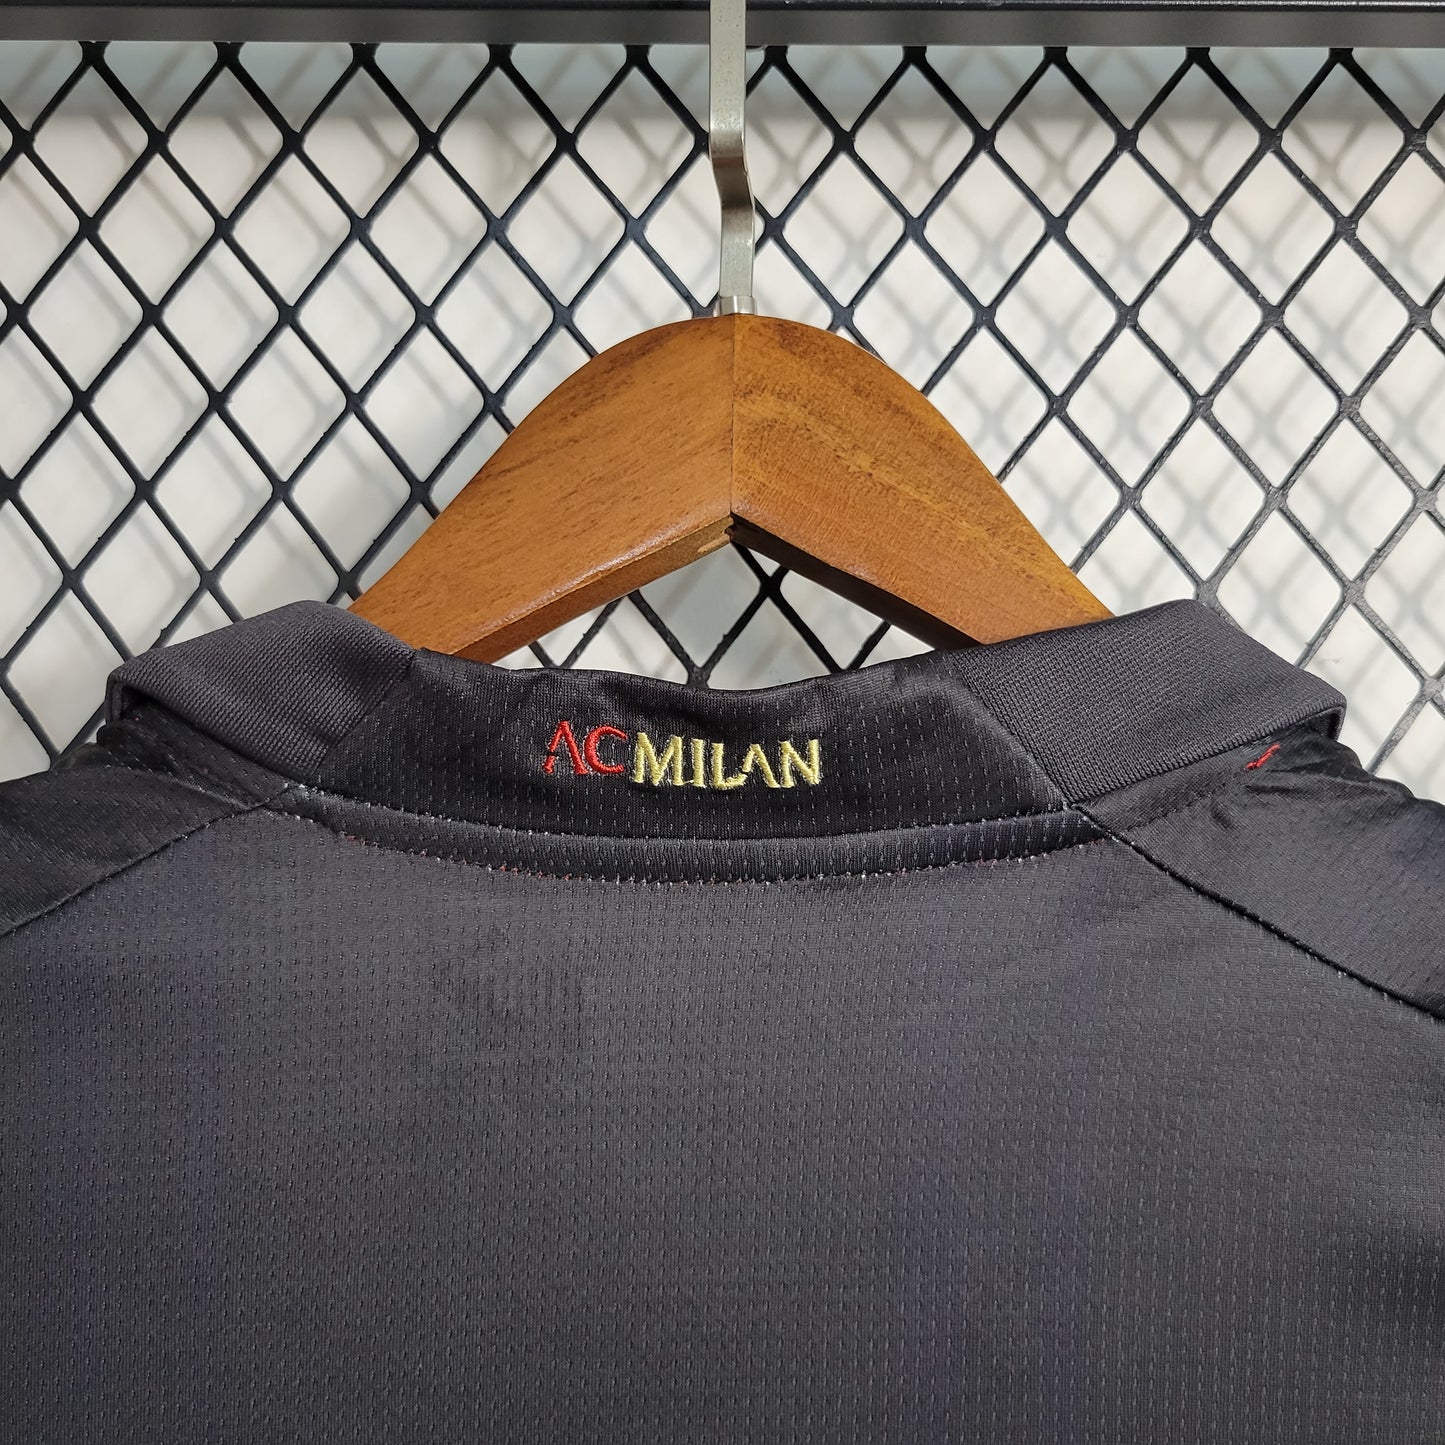 Ac Milan Special Edition Kit shirt